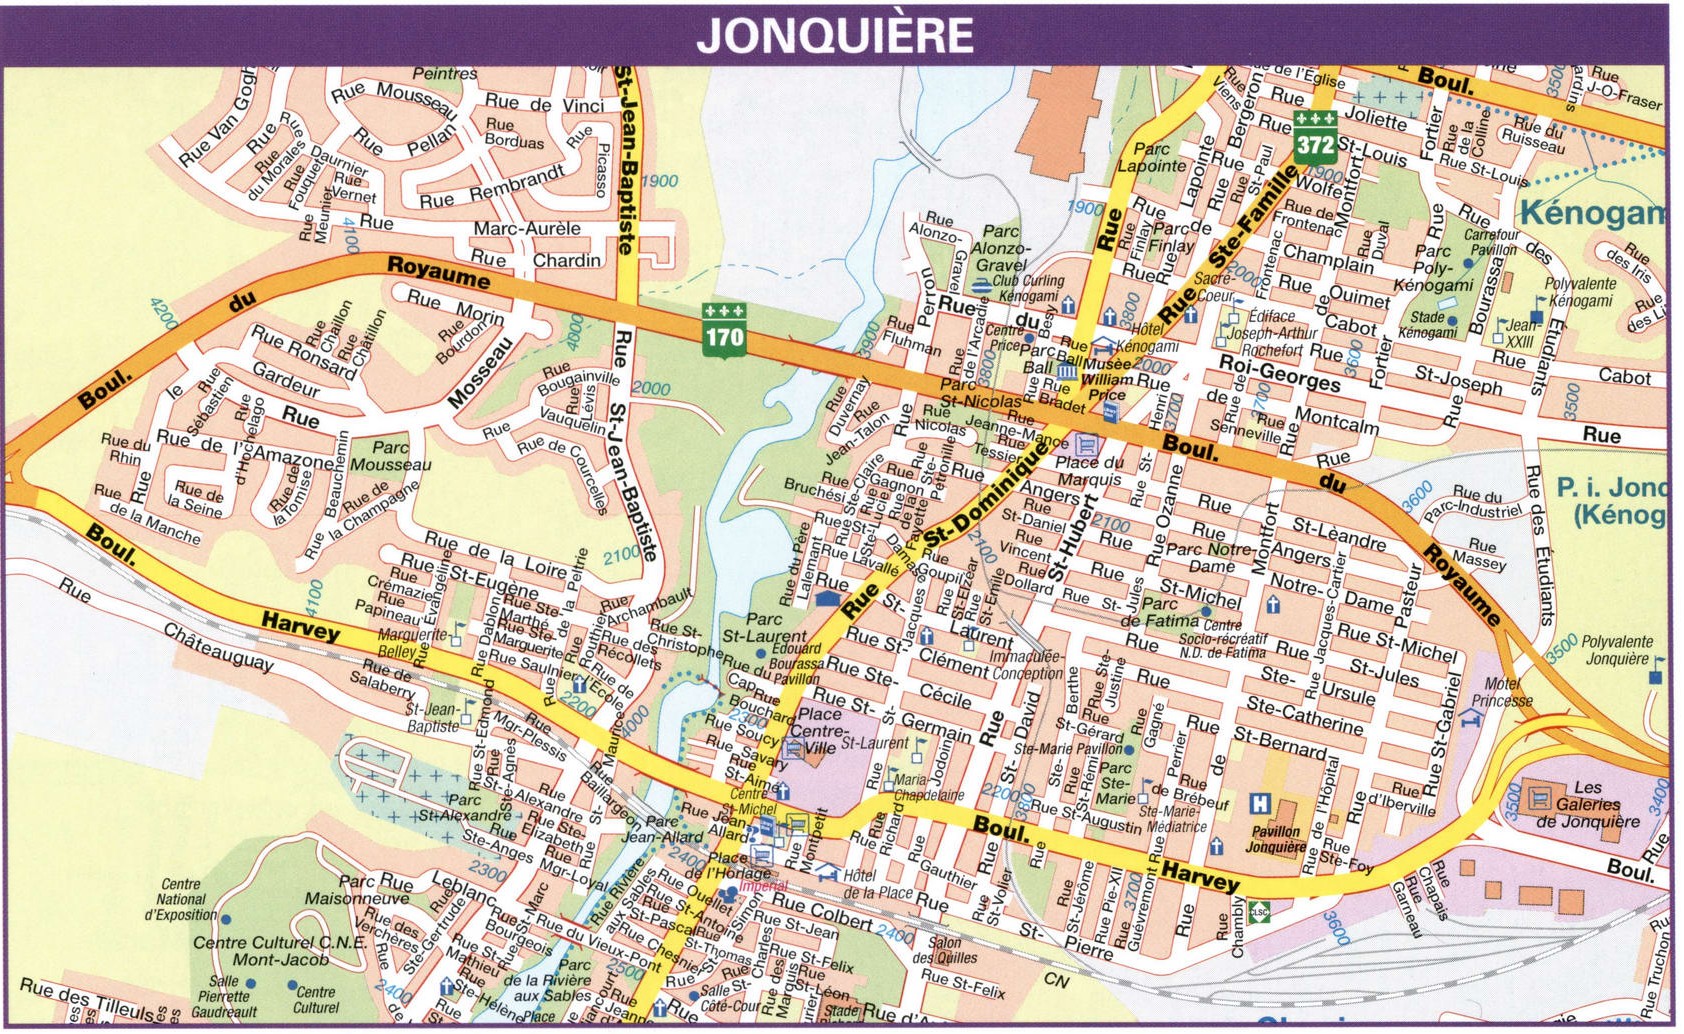 Jonquiere road map